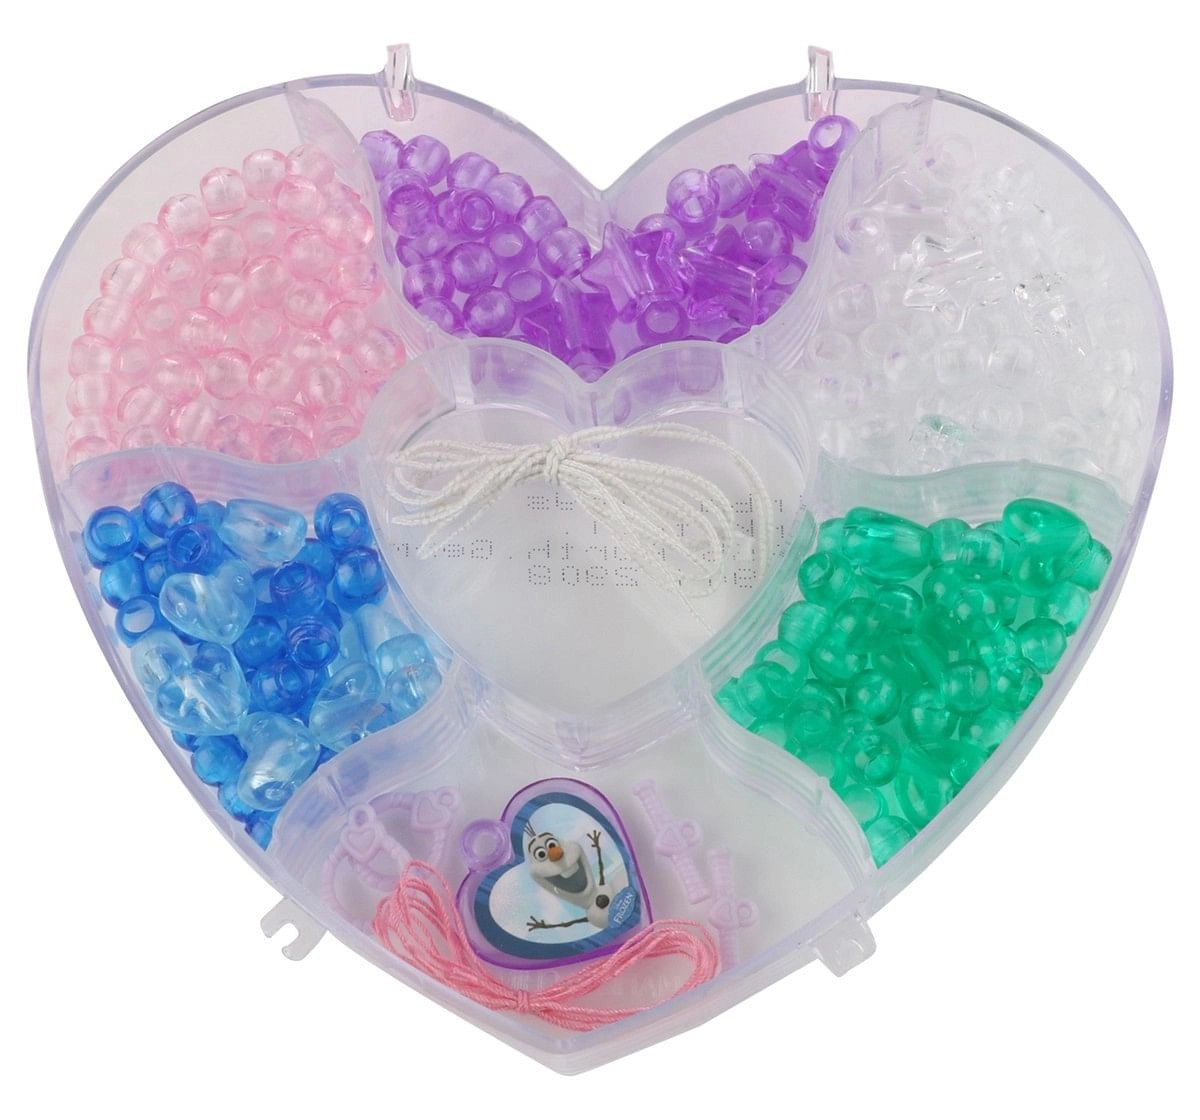 Disney Bead Set In Carry Case for Kids, 5Y+ (Multicolor)